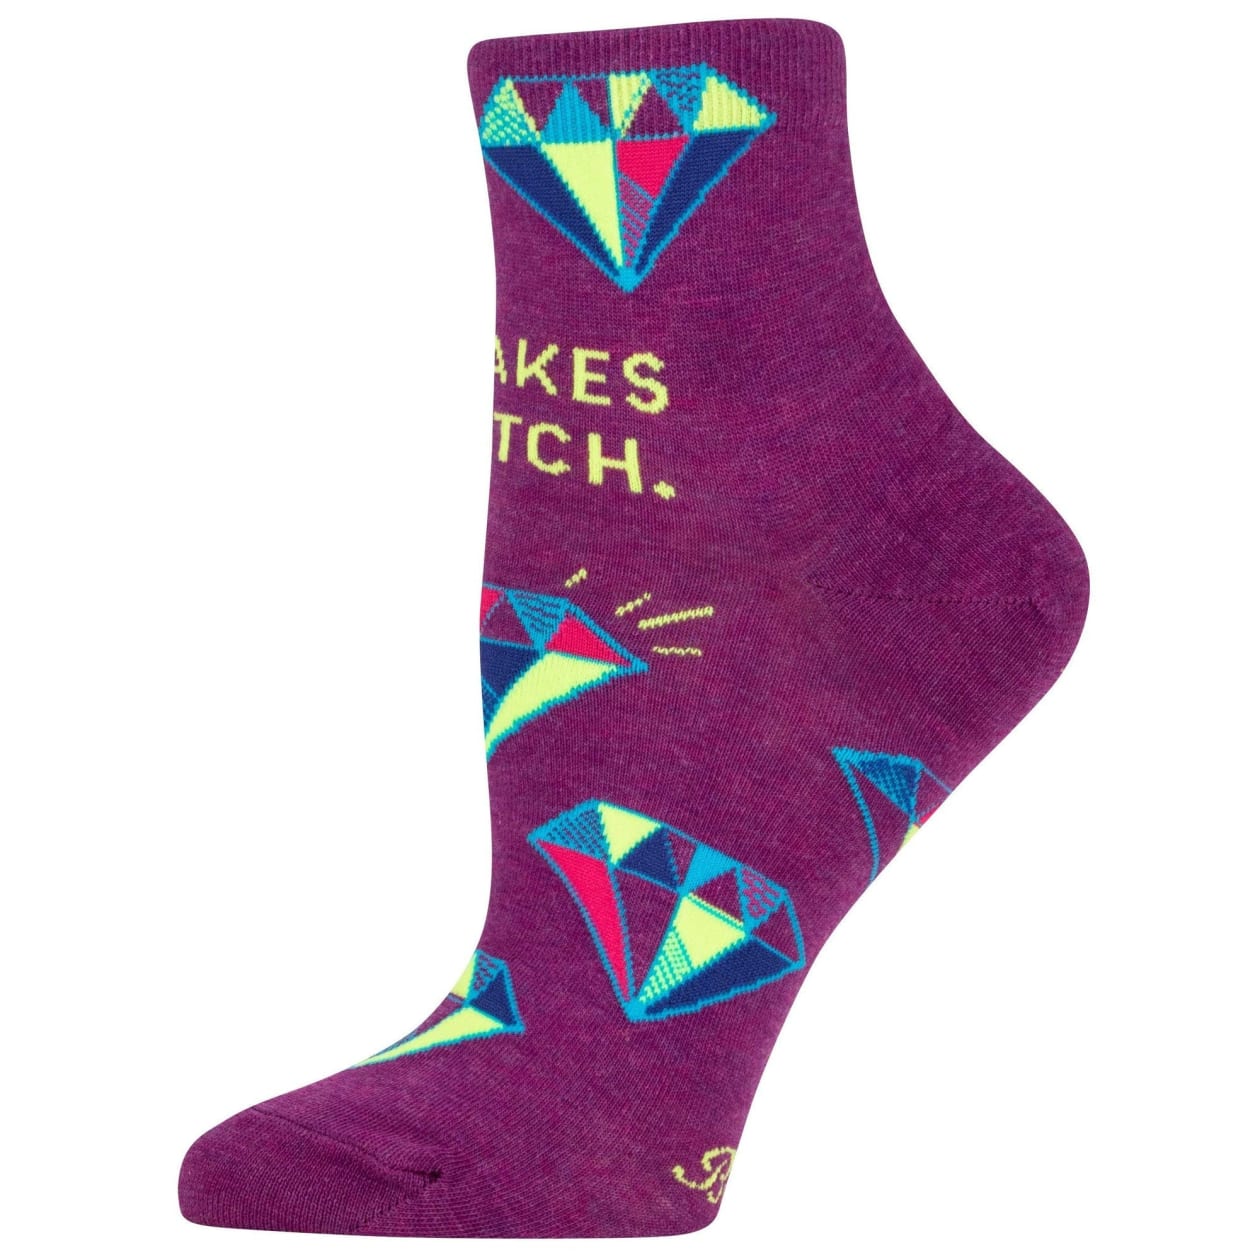 It Takes a Bitch Women's Ankle Socks | Purple with Diamond Motif | BlueQ at GetBullish